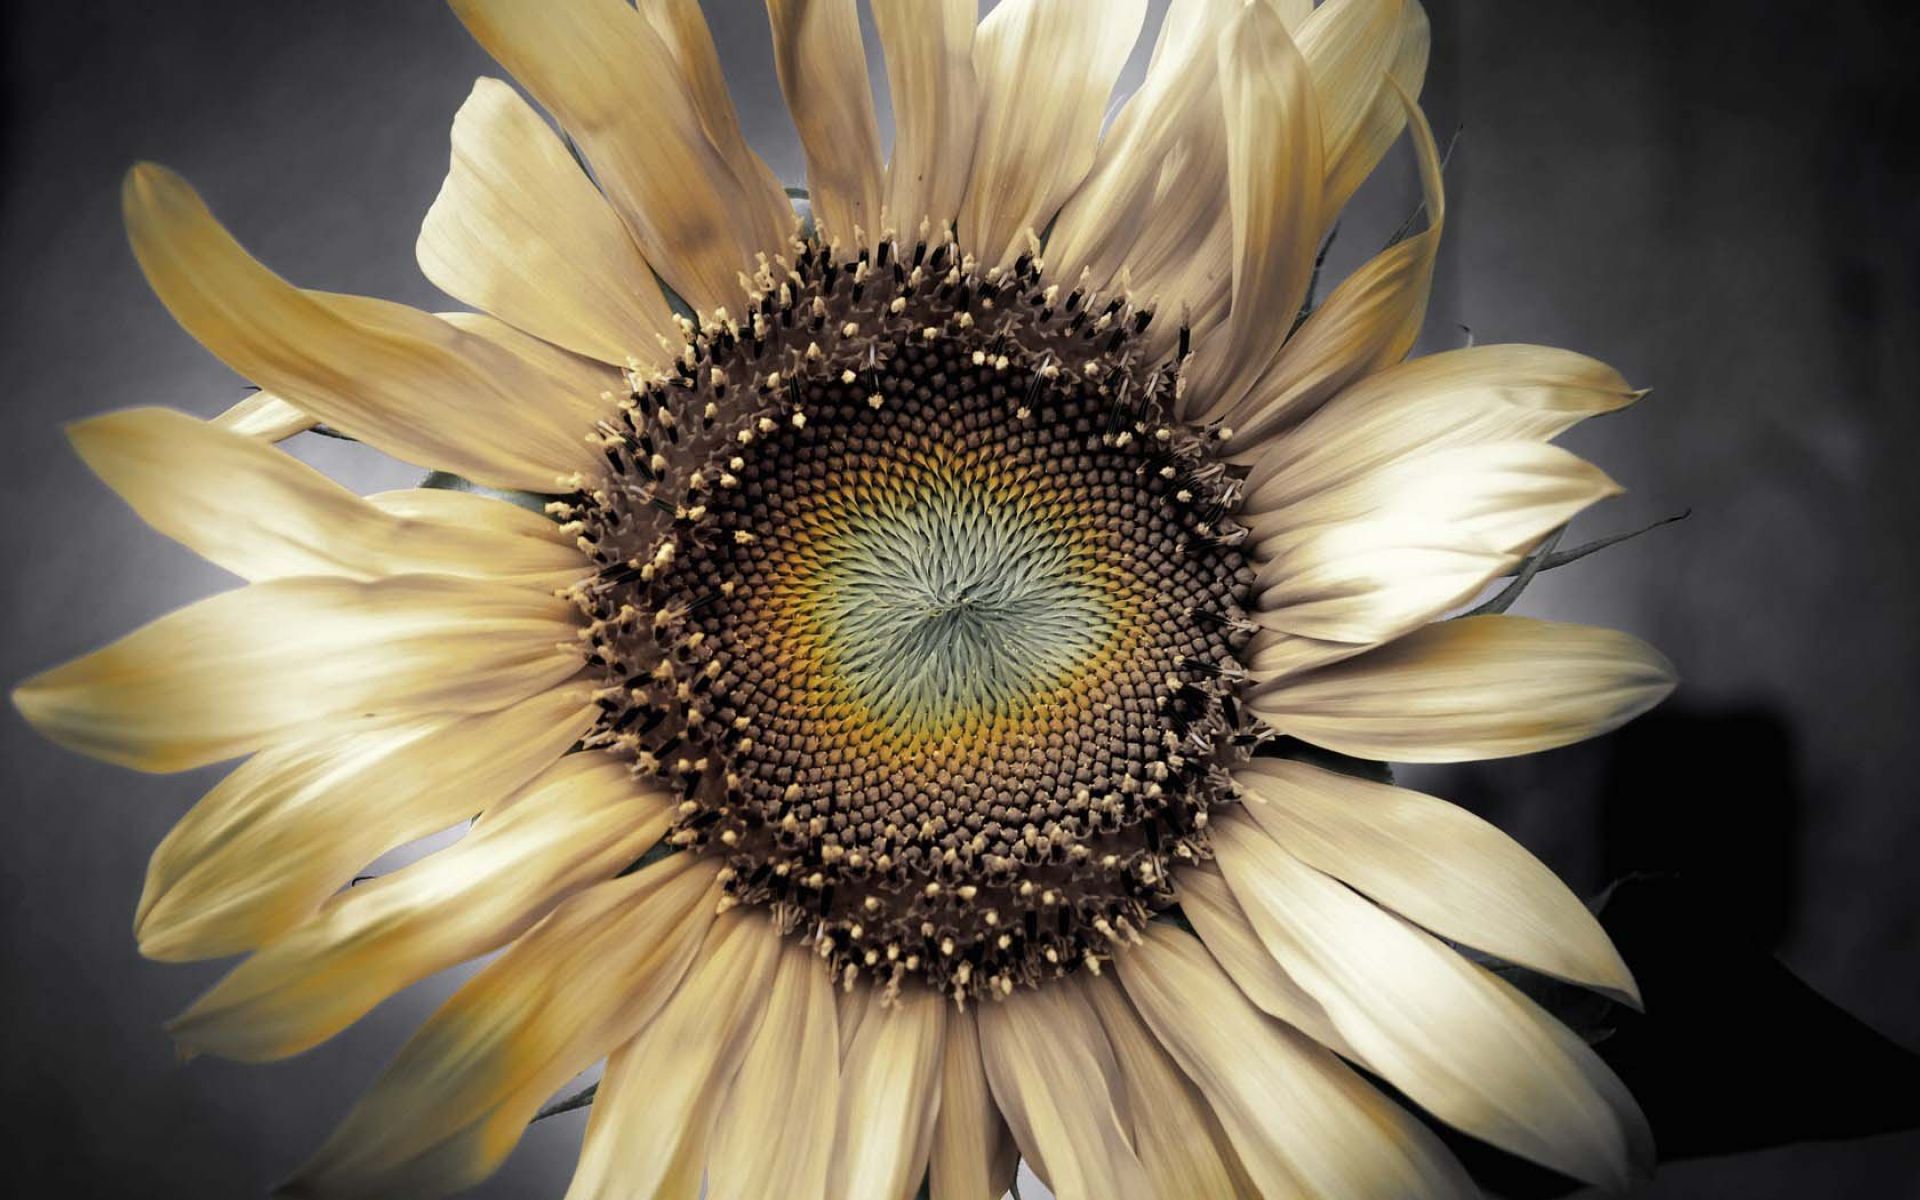 Dry Flower Sunflower Petals Wallpaper. HD Flowers Wallpaper for Mobile and Desktop